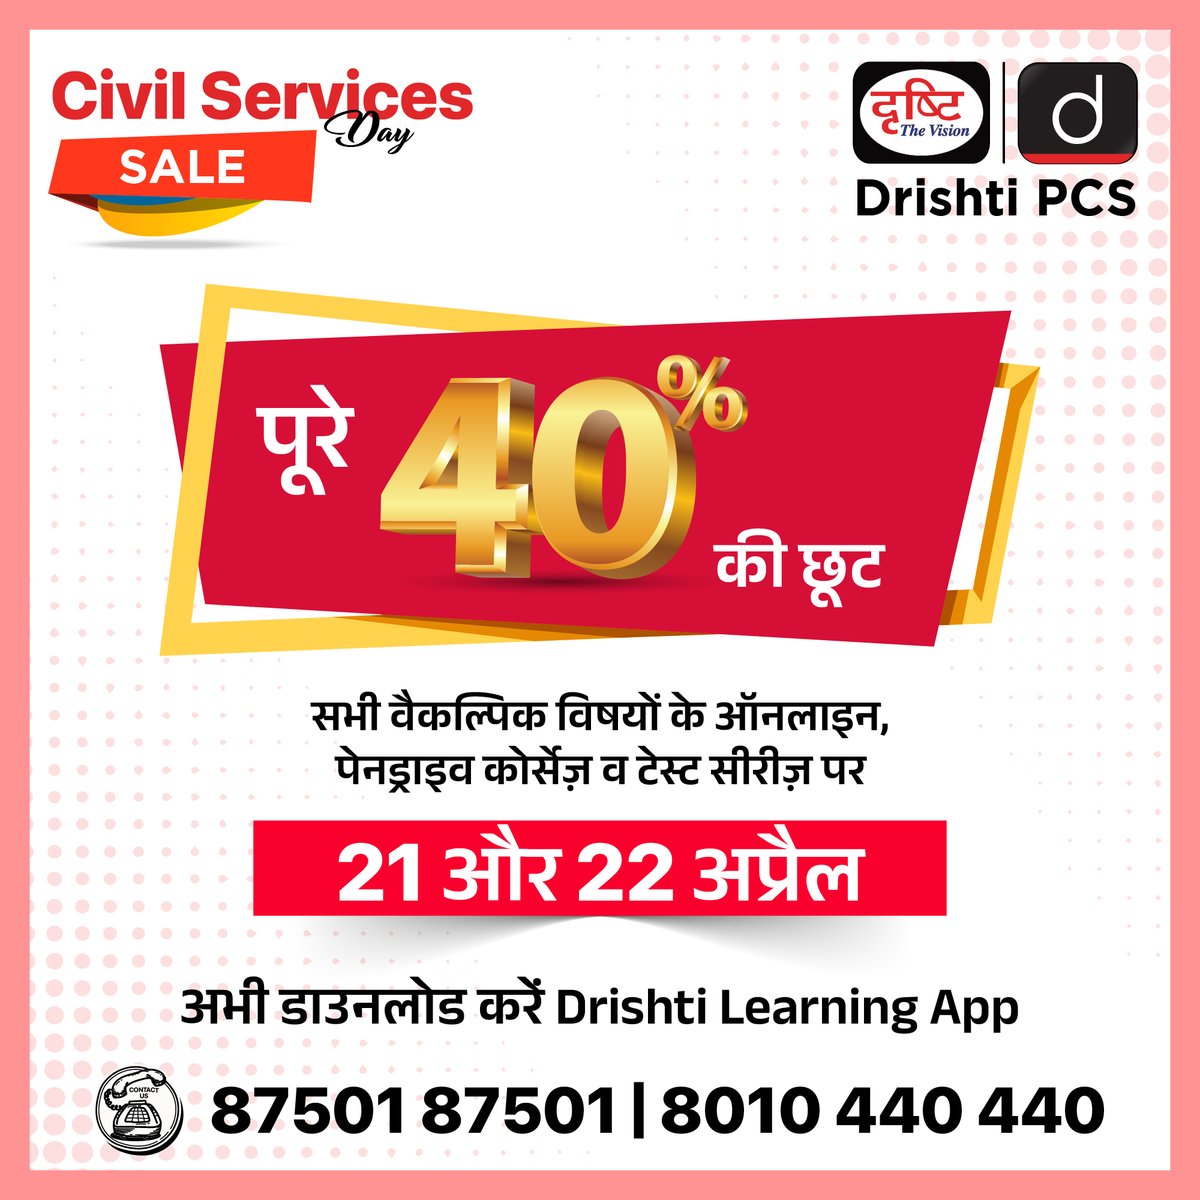 Accelerate your UPSC Mains Optional Subject Preparation with our Hindi Optional Course, now available with  40% discount! 

#Discount drishti.xyz/CSD-Sale-SM-EN   

#CivilServicesDay #Discounts #DiscountSale #BiggestDiscount  #PCS  #Officers #DrishtiIAS